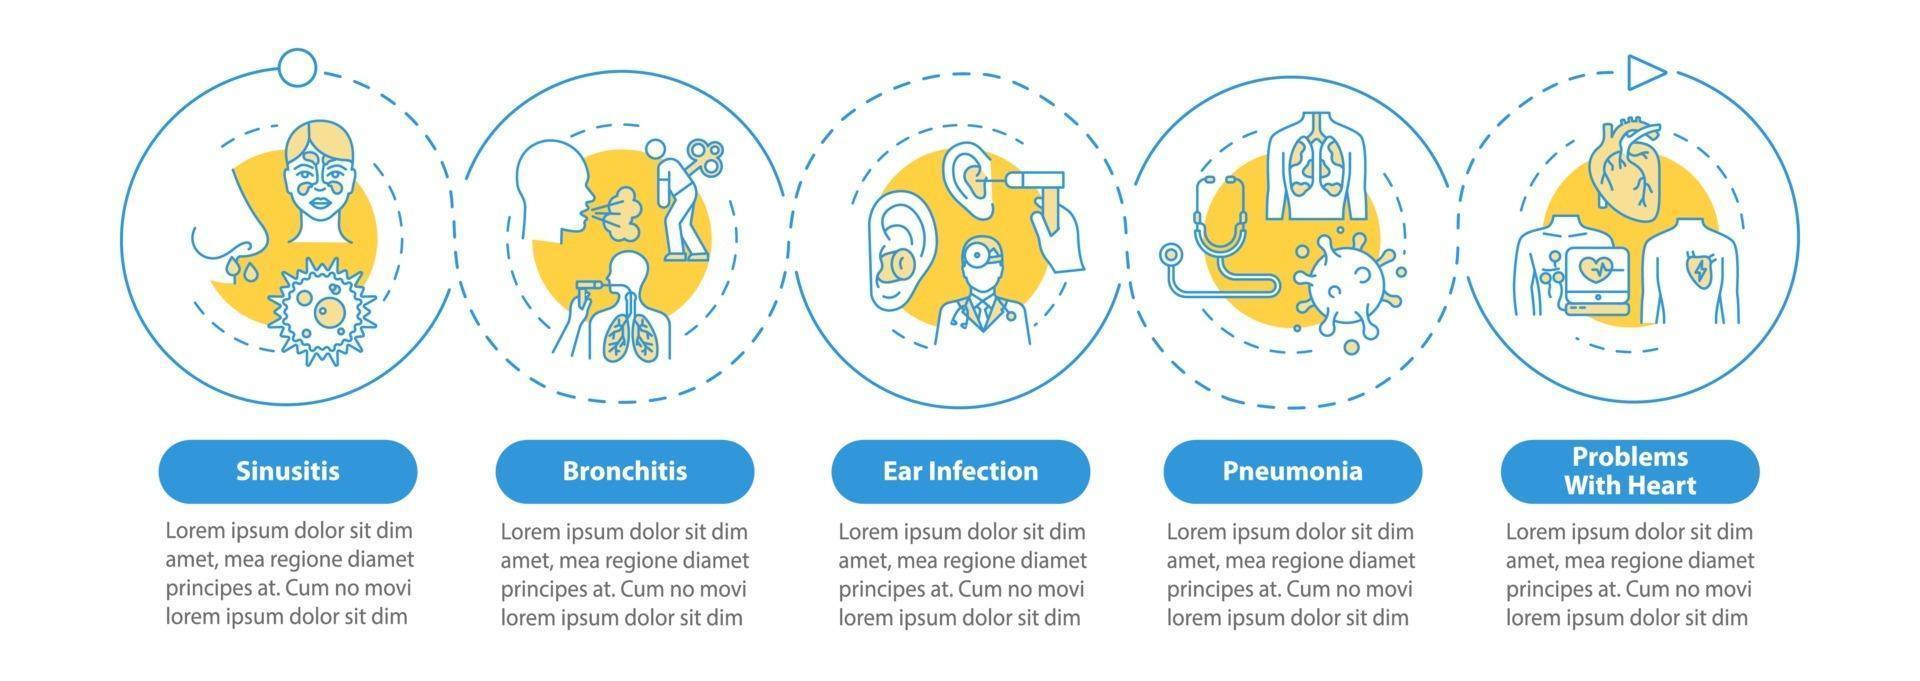 Influenza symptoms vector infographic template